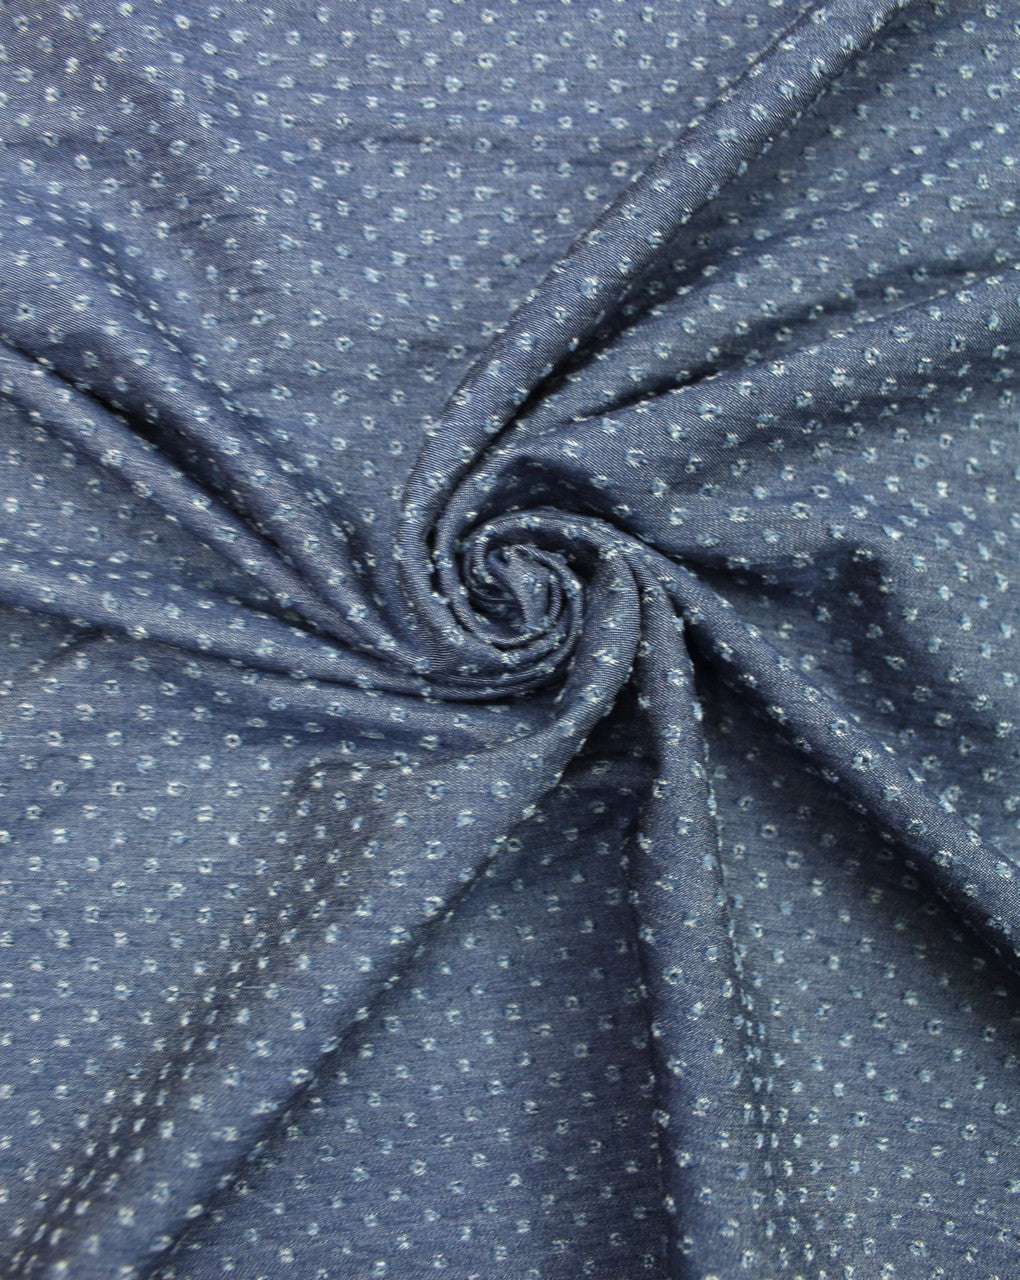 Navy Blue 1 Cotton Denim Dobby Fabric